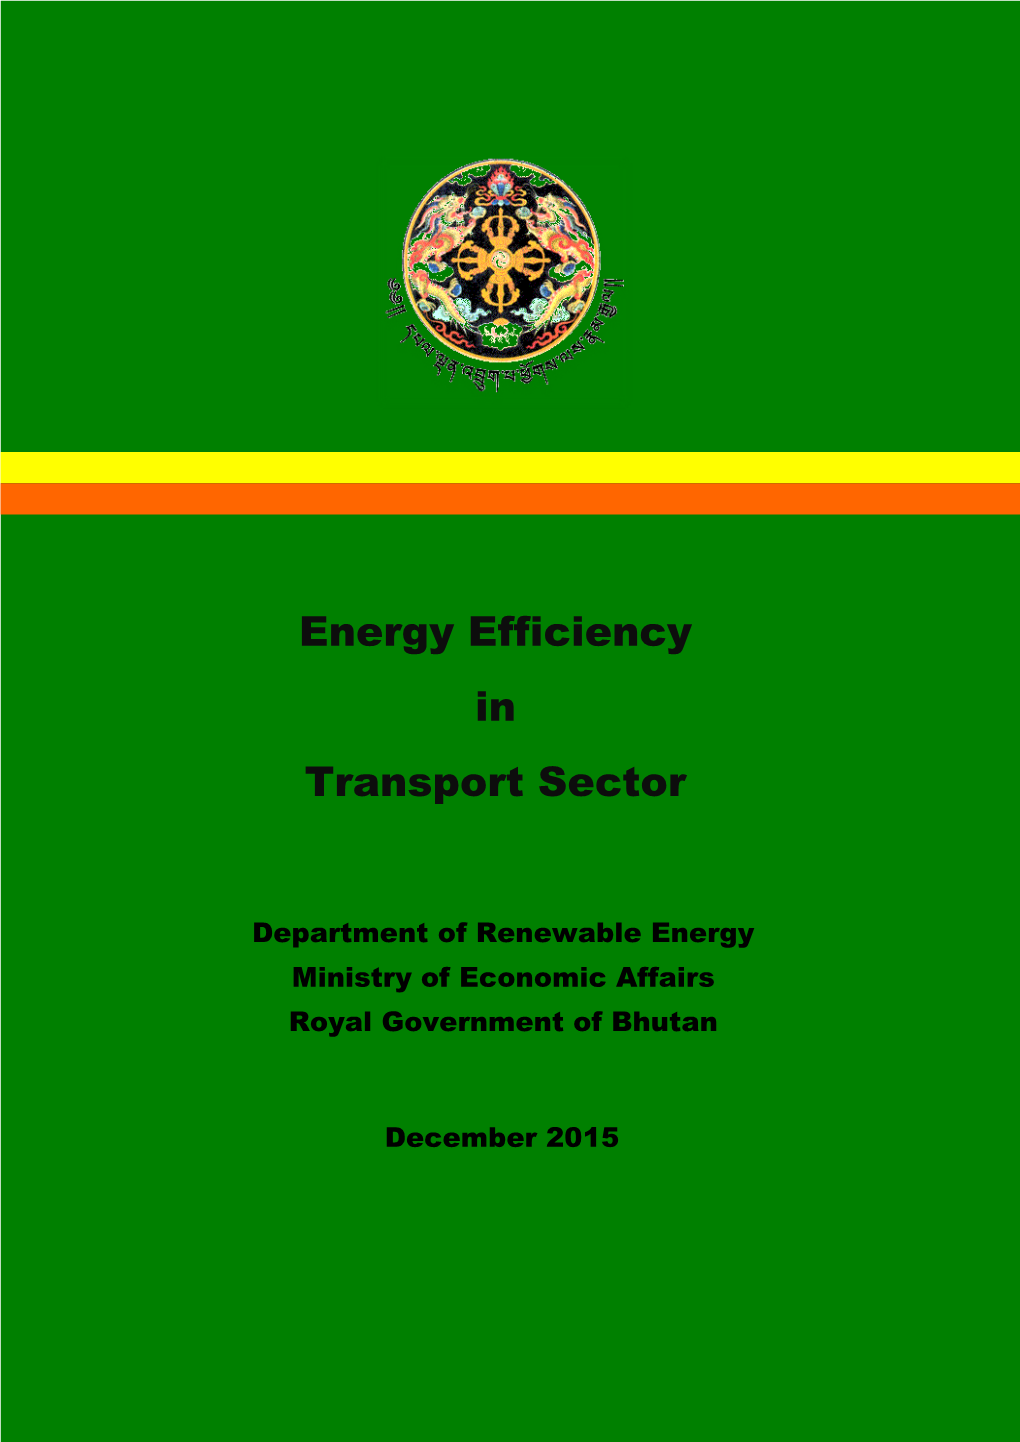 Energy Efficiency in Transport Sector